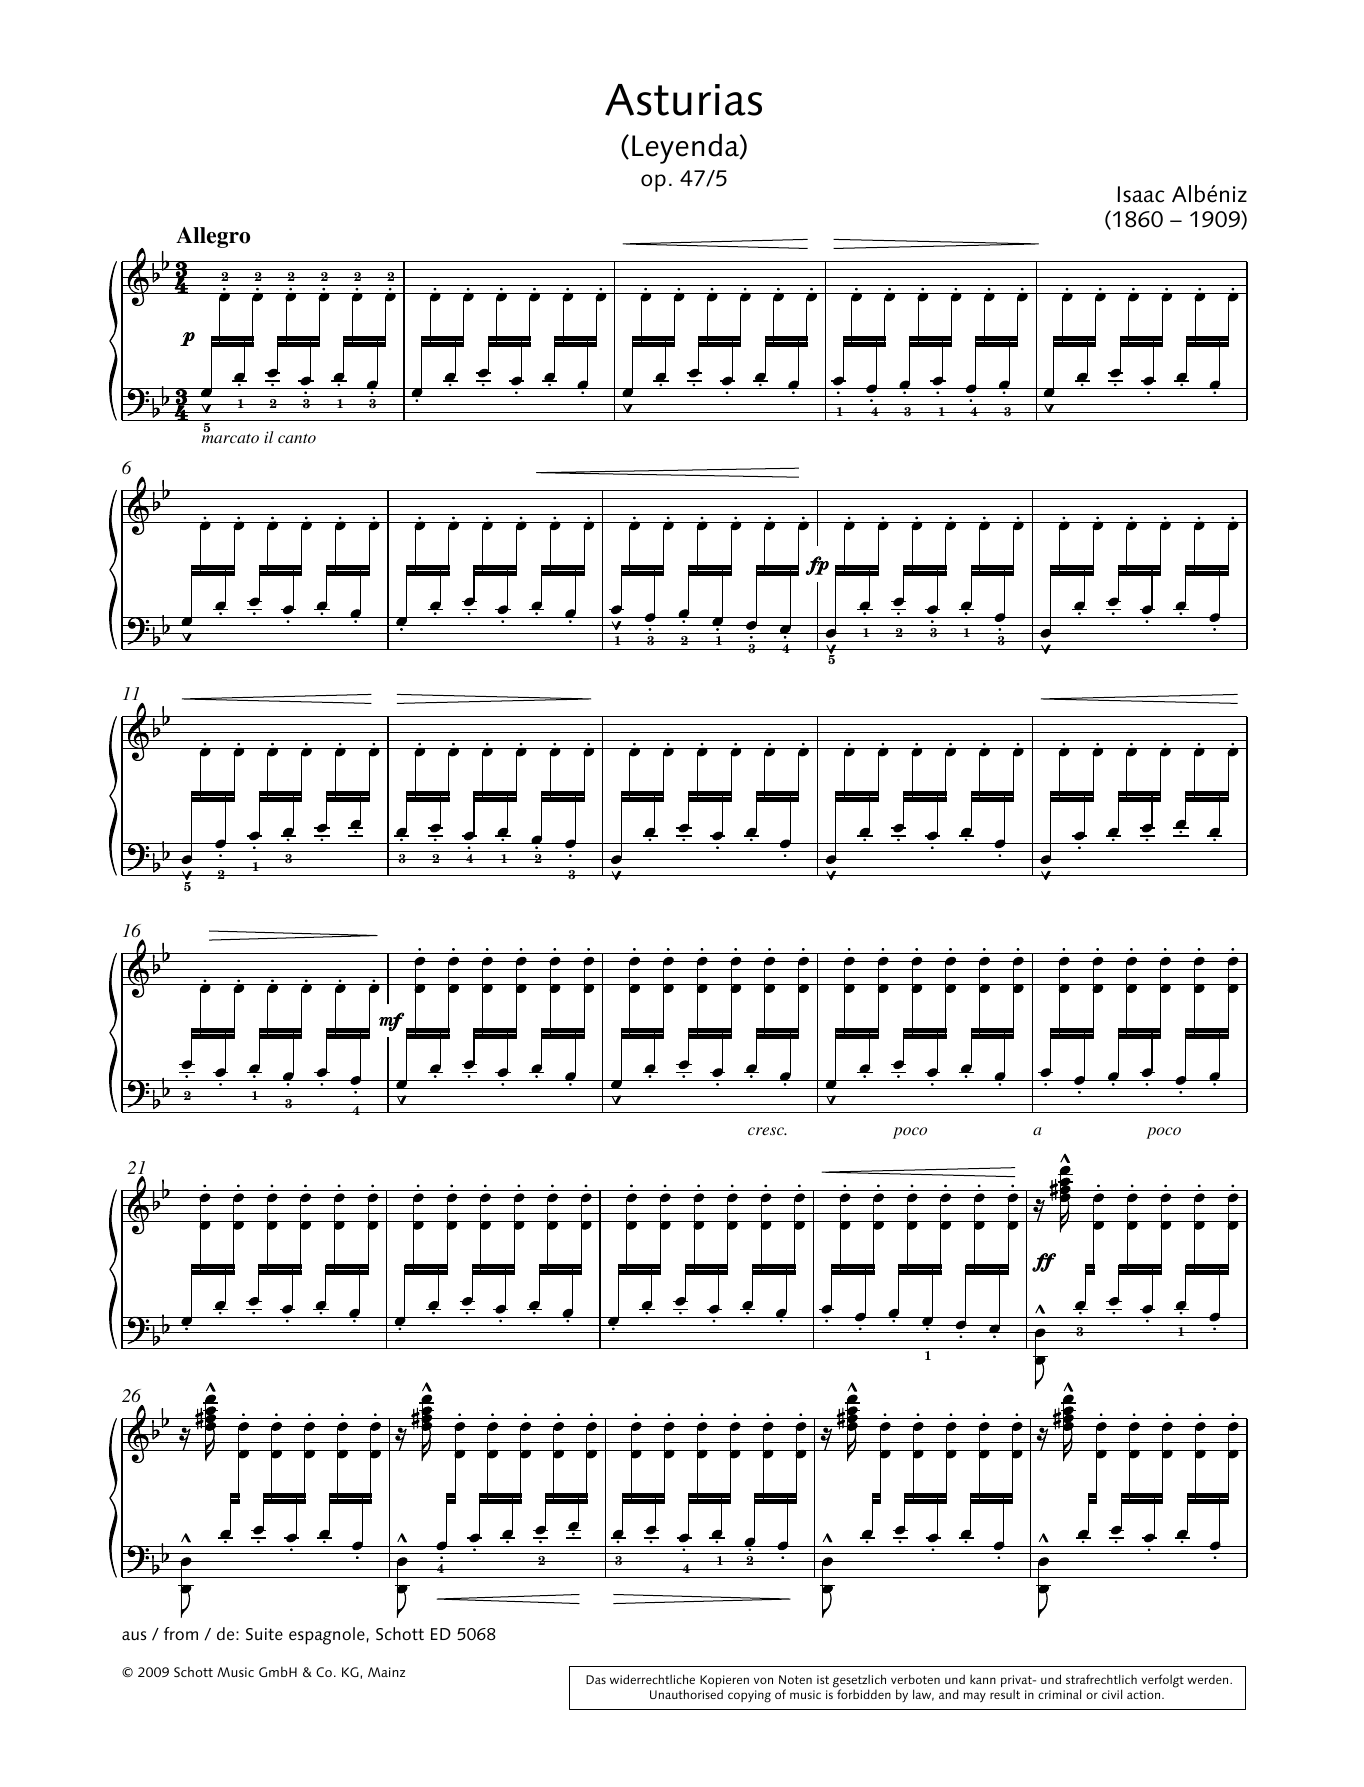 Isaac Albéniz Asturias Sheet Music Notes & Chords for Solo Guitar - Download or Print PDF